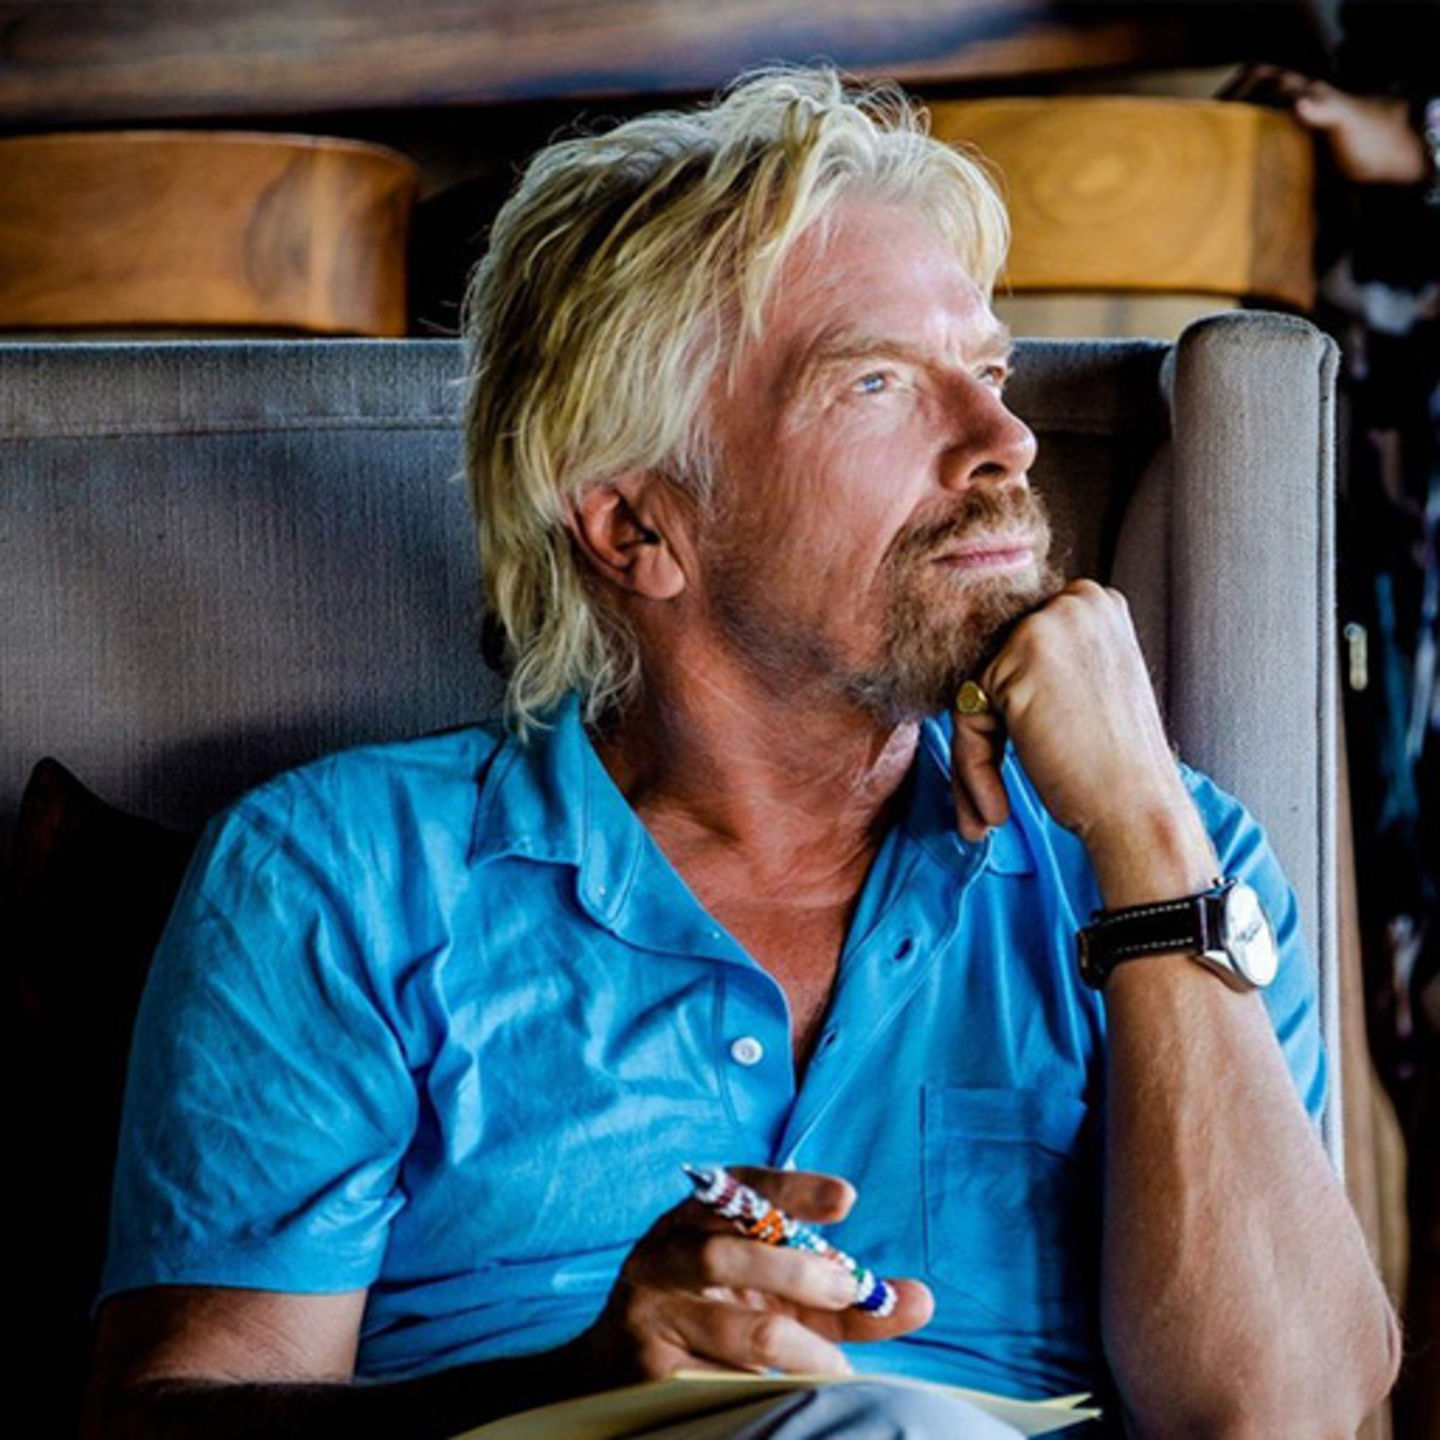 Richard Branson sitting down looking pensive